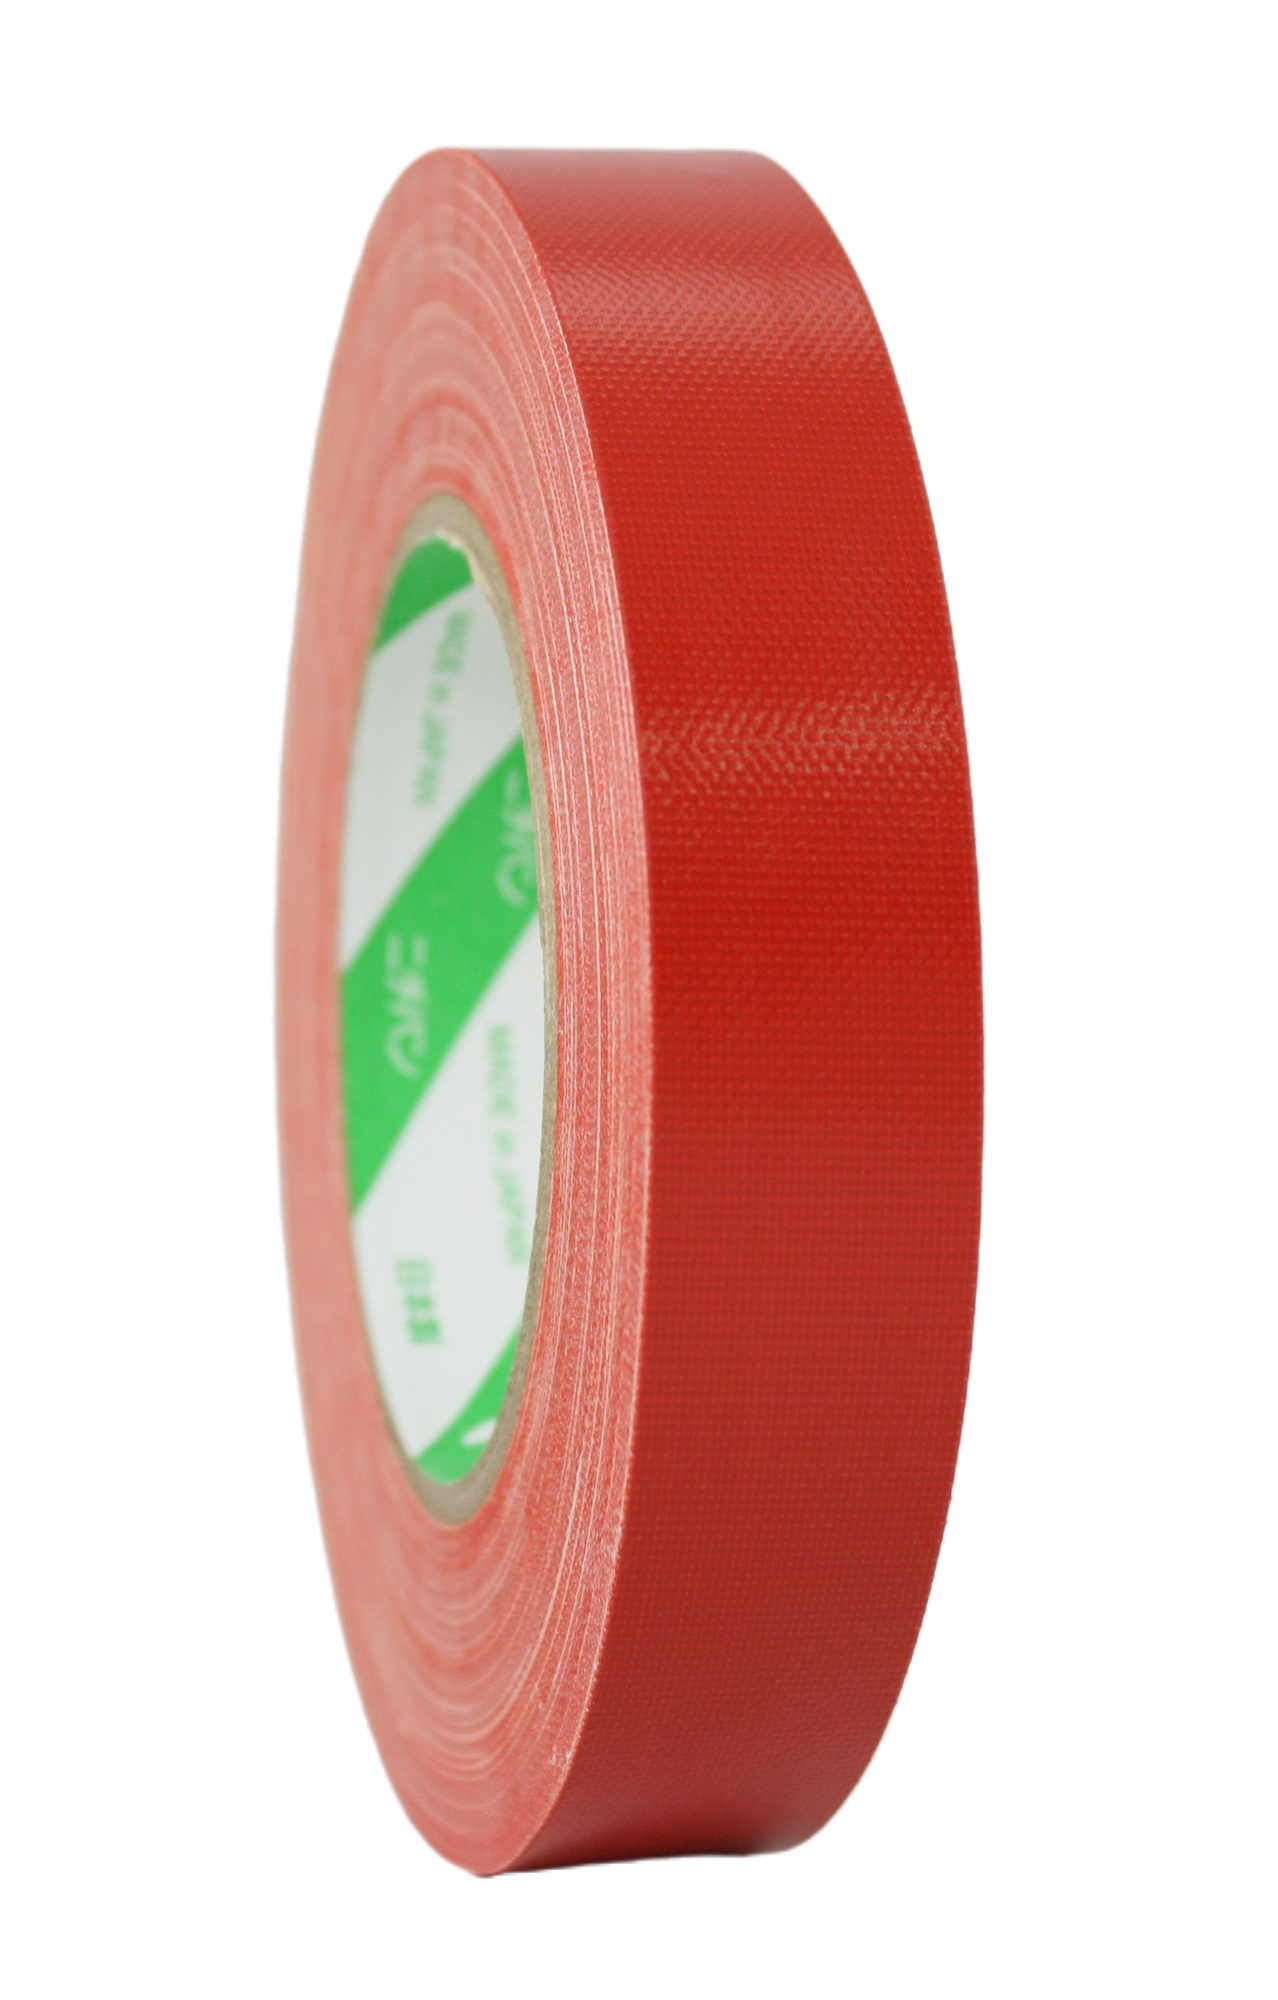 Nichiban 1" Gaffer Tape, Red, side view